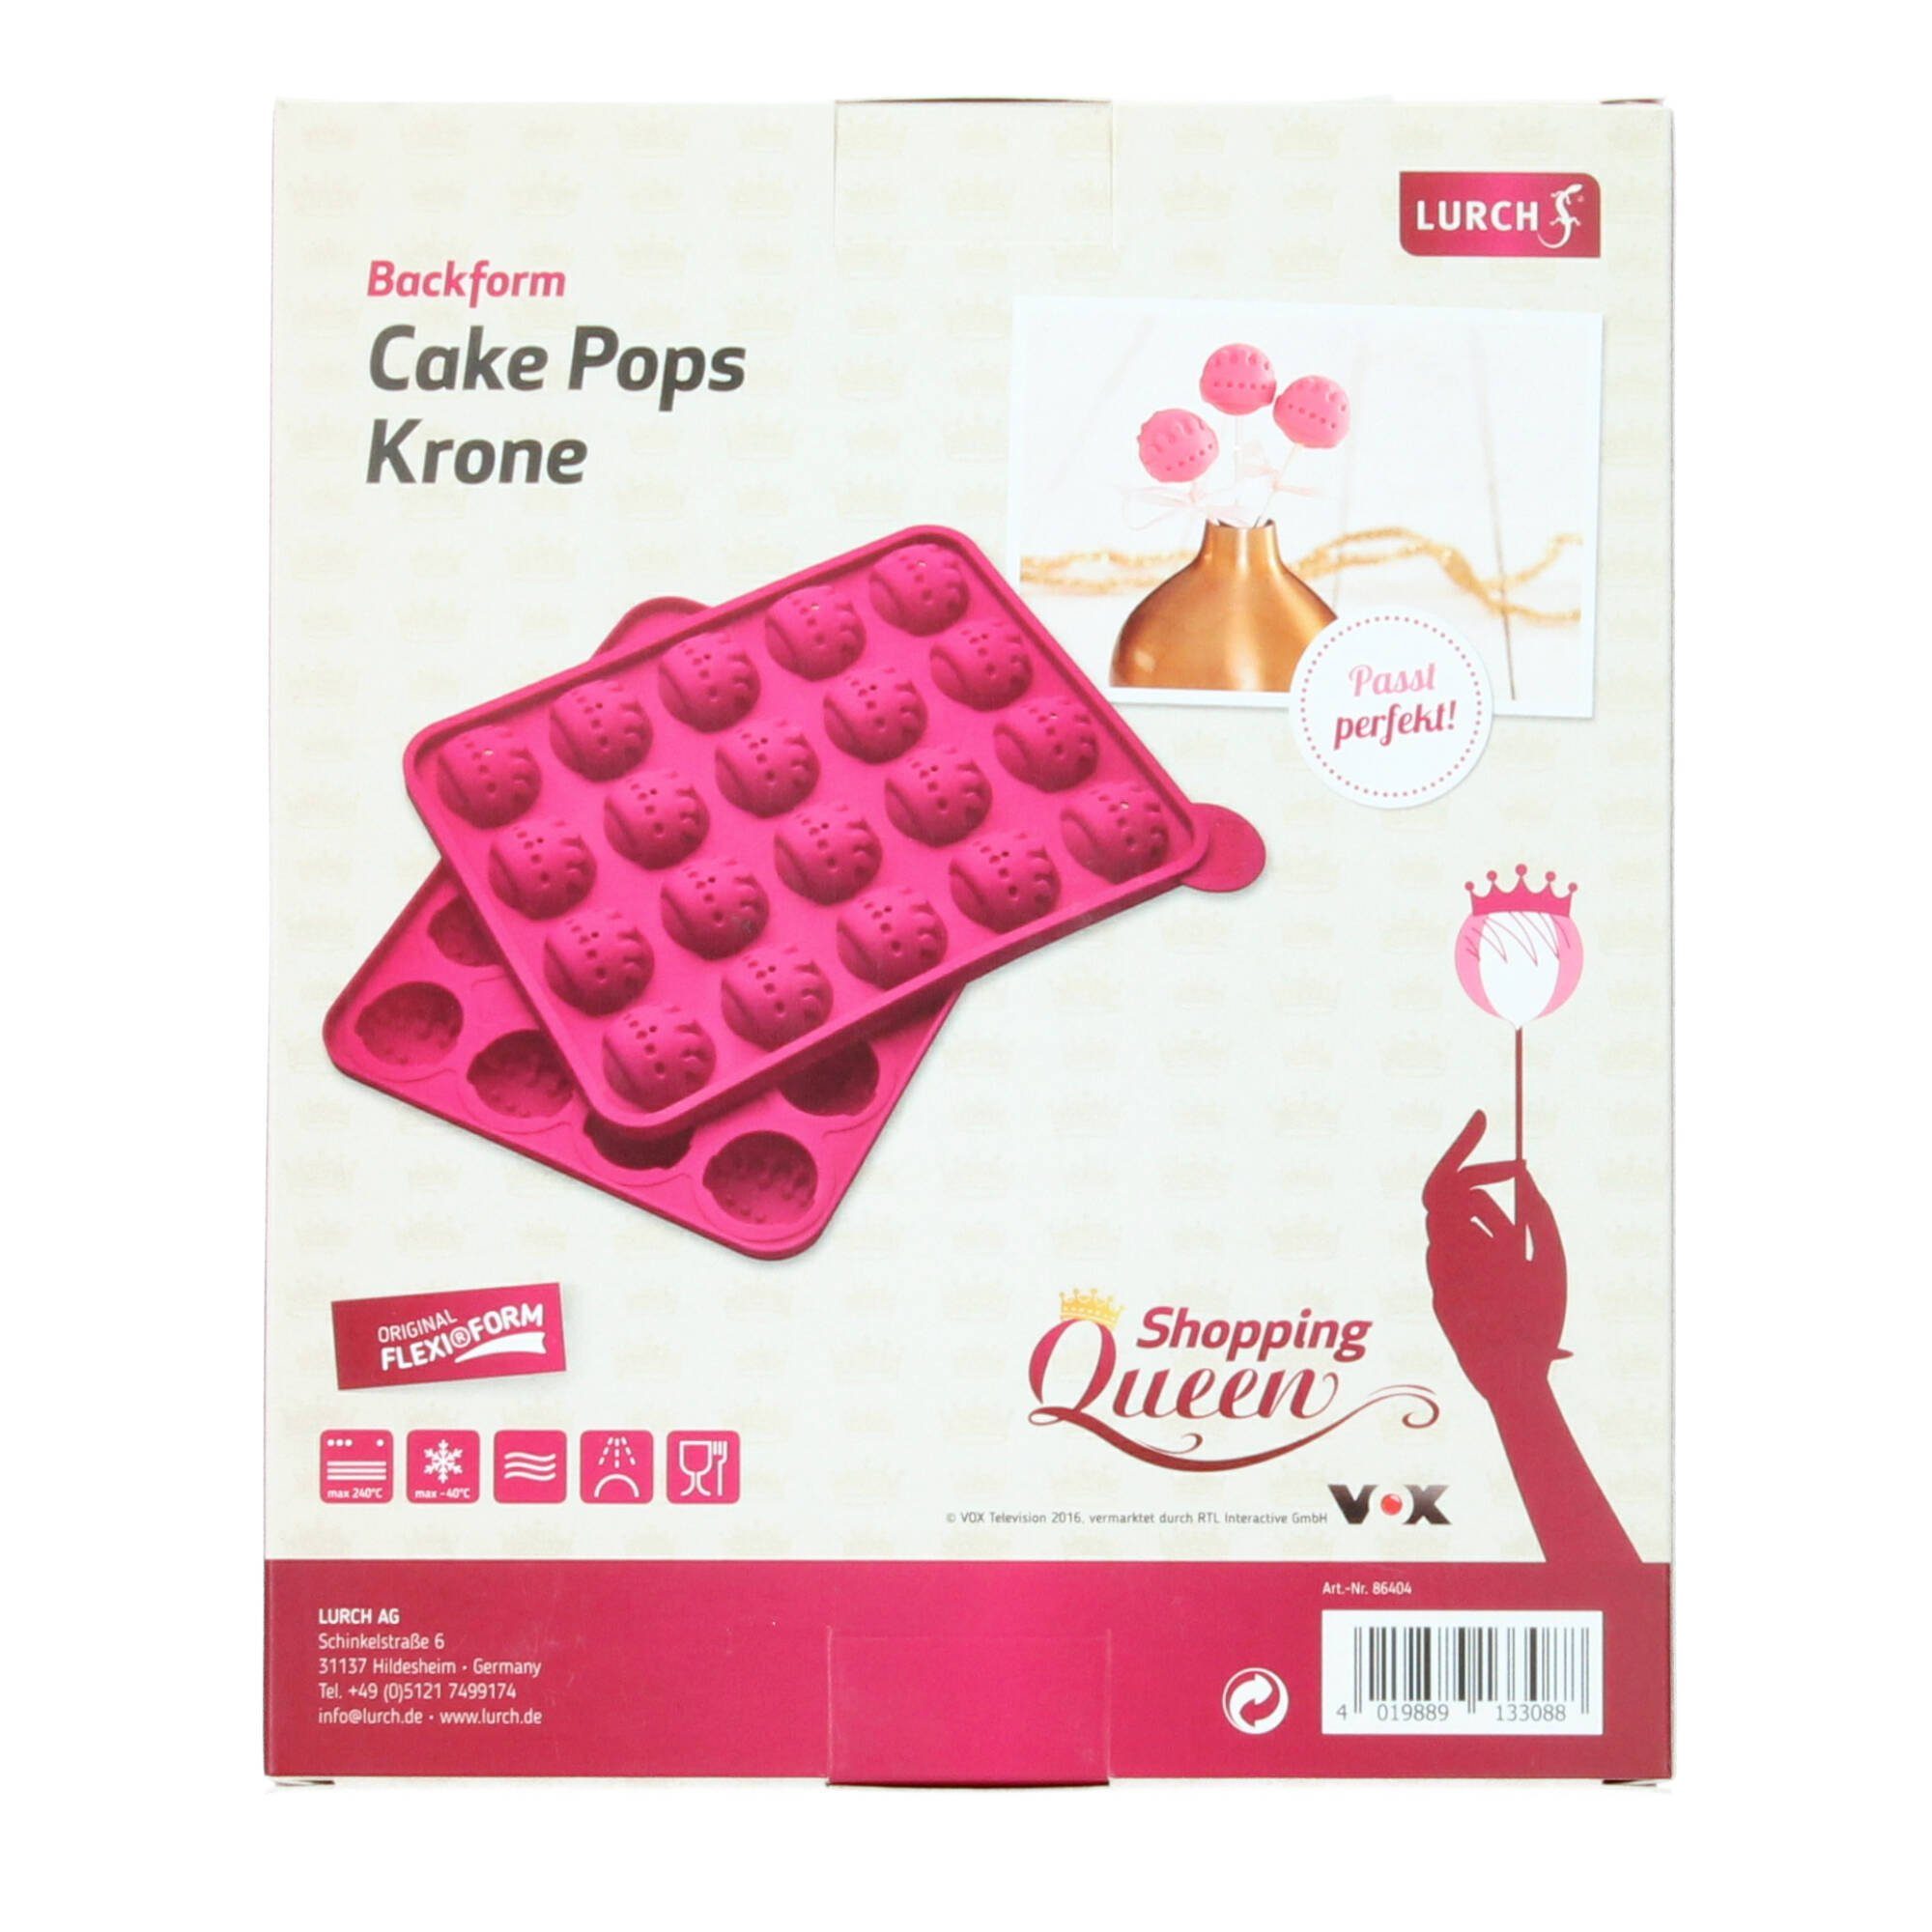 Krone Queen Backform Lurch Pops Shopping Cake pink